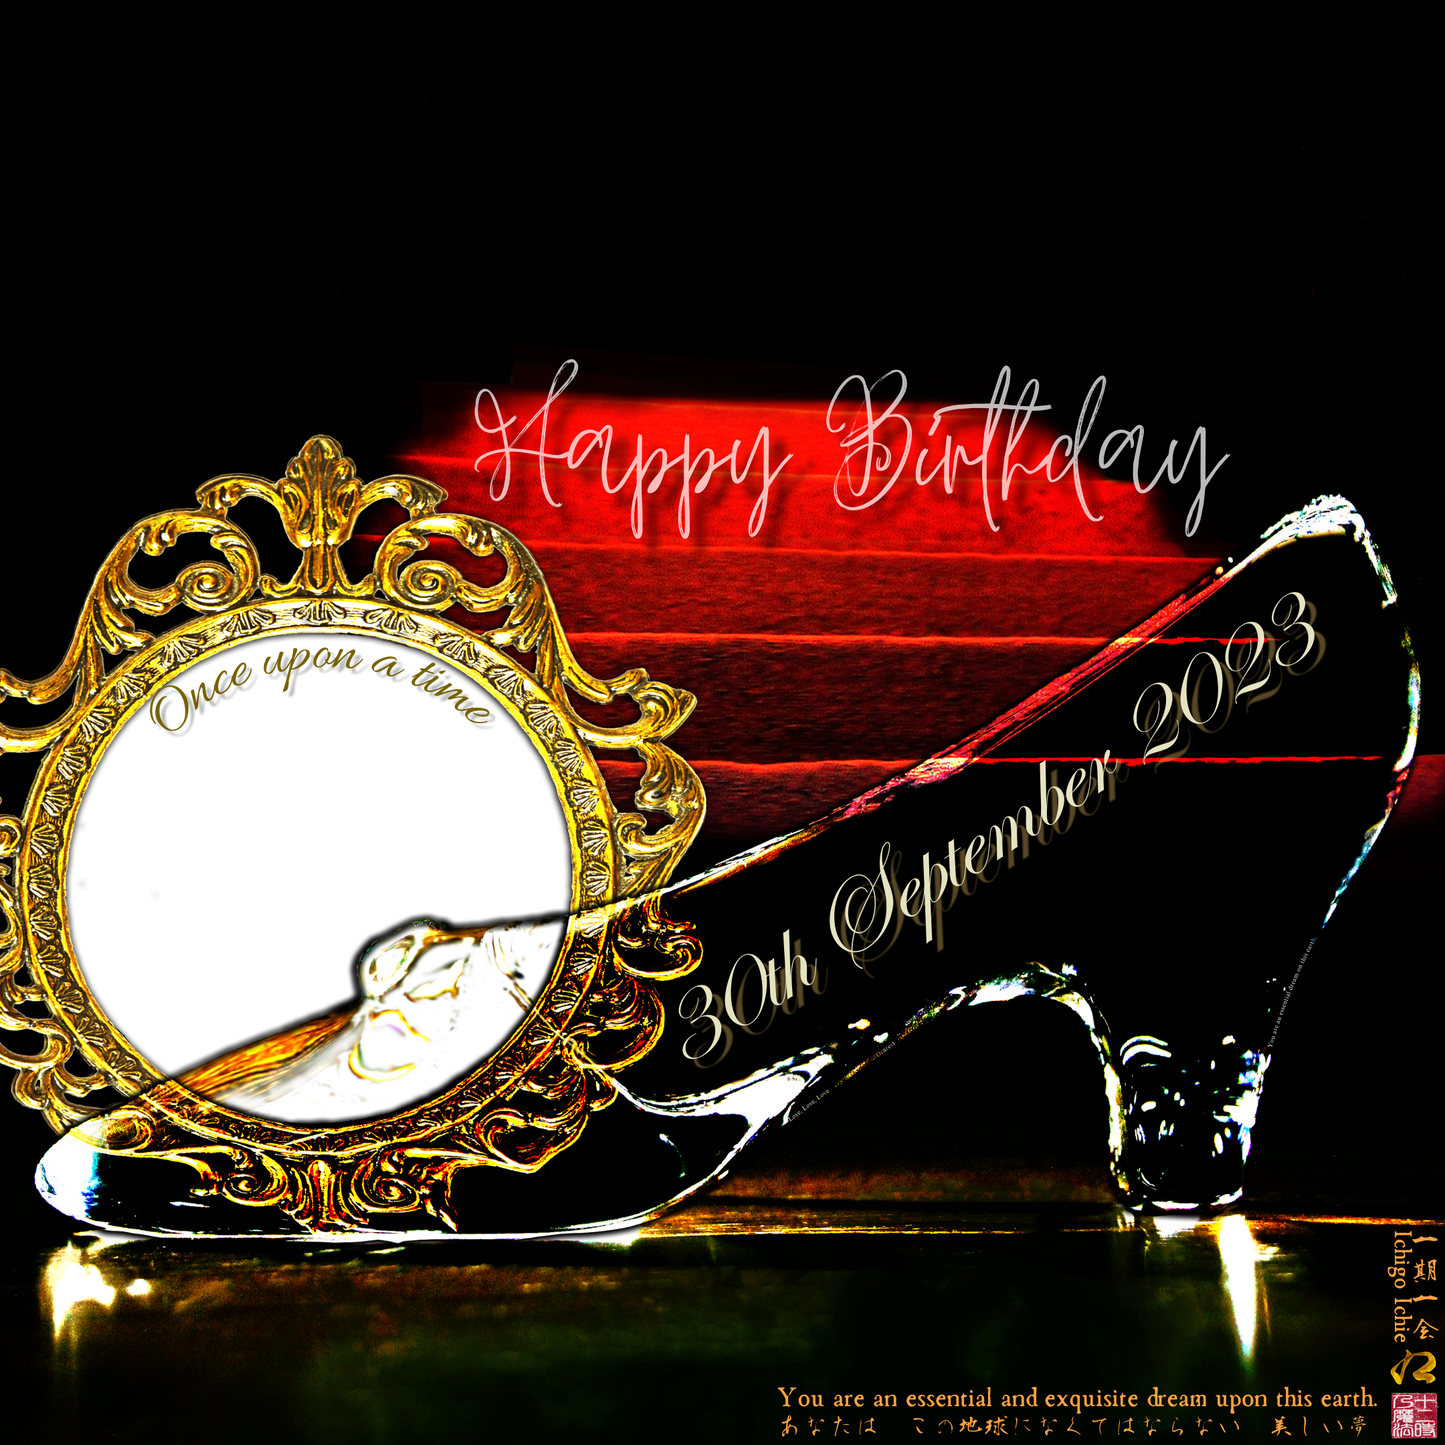 Happy Birthday Glass Slipper "Ichigo Ichie" 30th September 2023 the Left (1-of-1) NFT Art